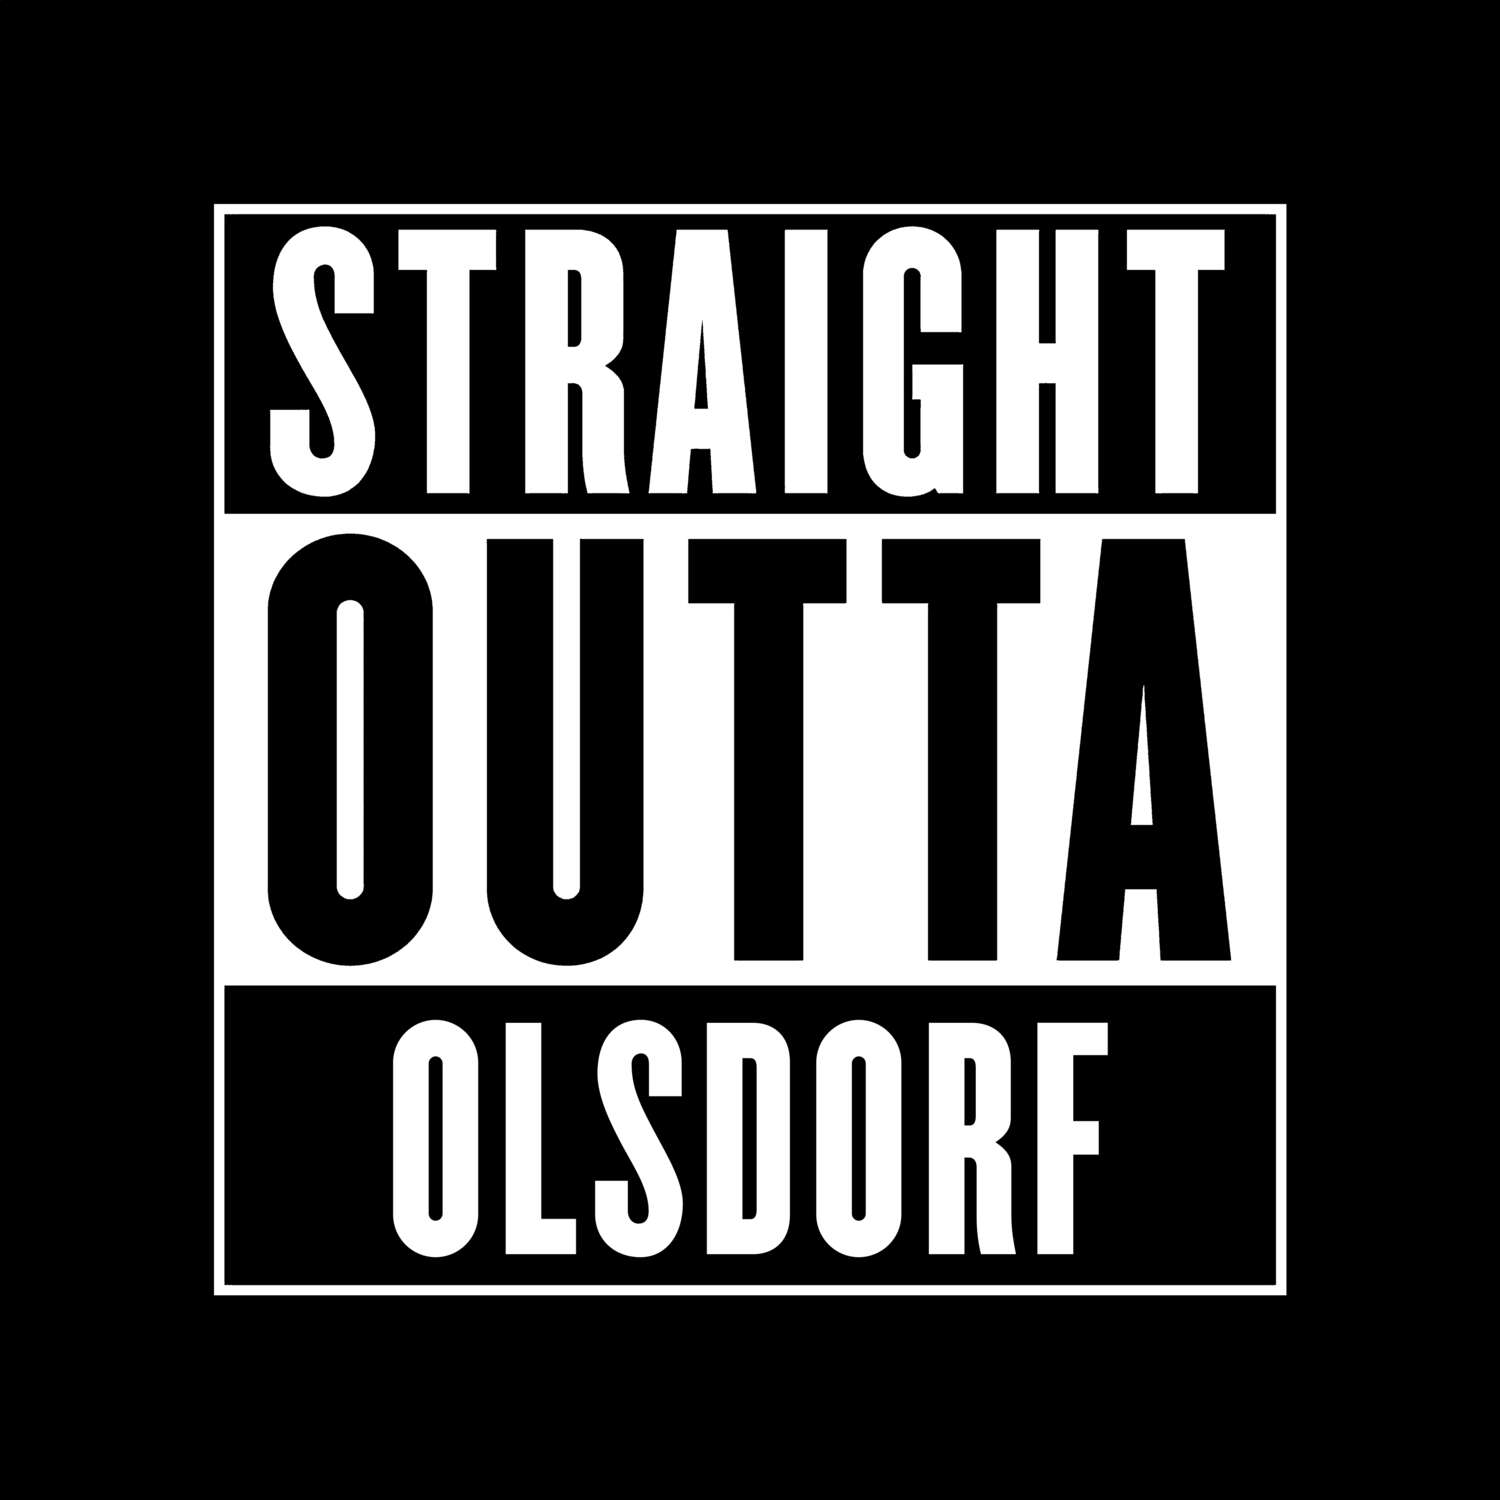 Olsdorf T-Shirt »Straight Outta«